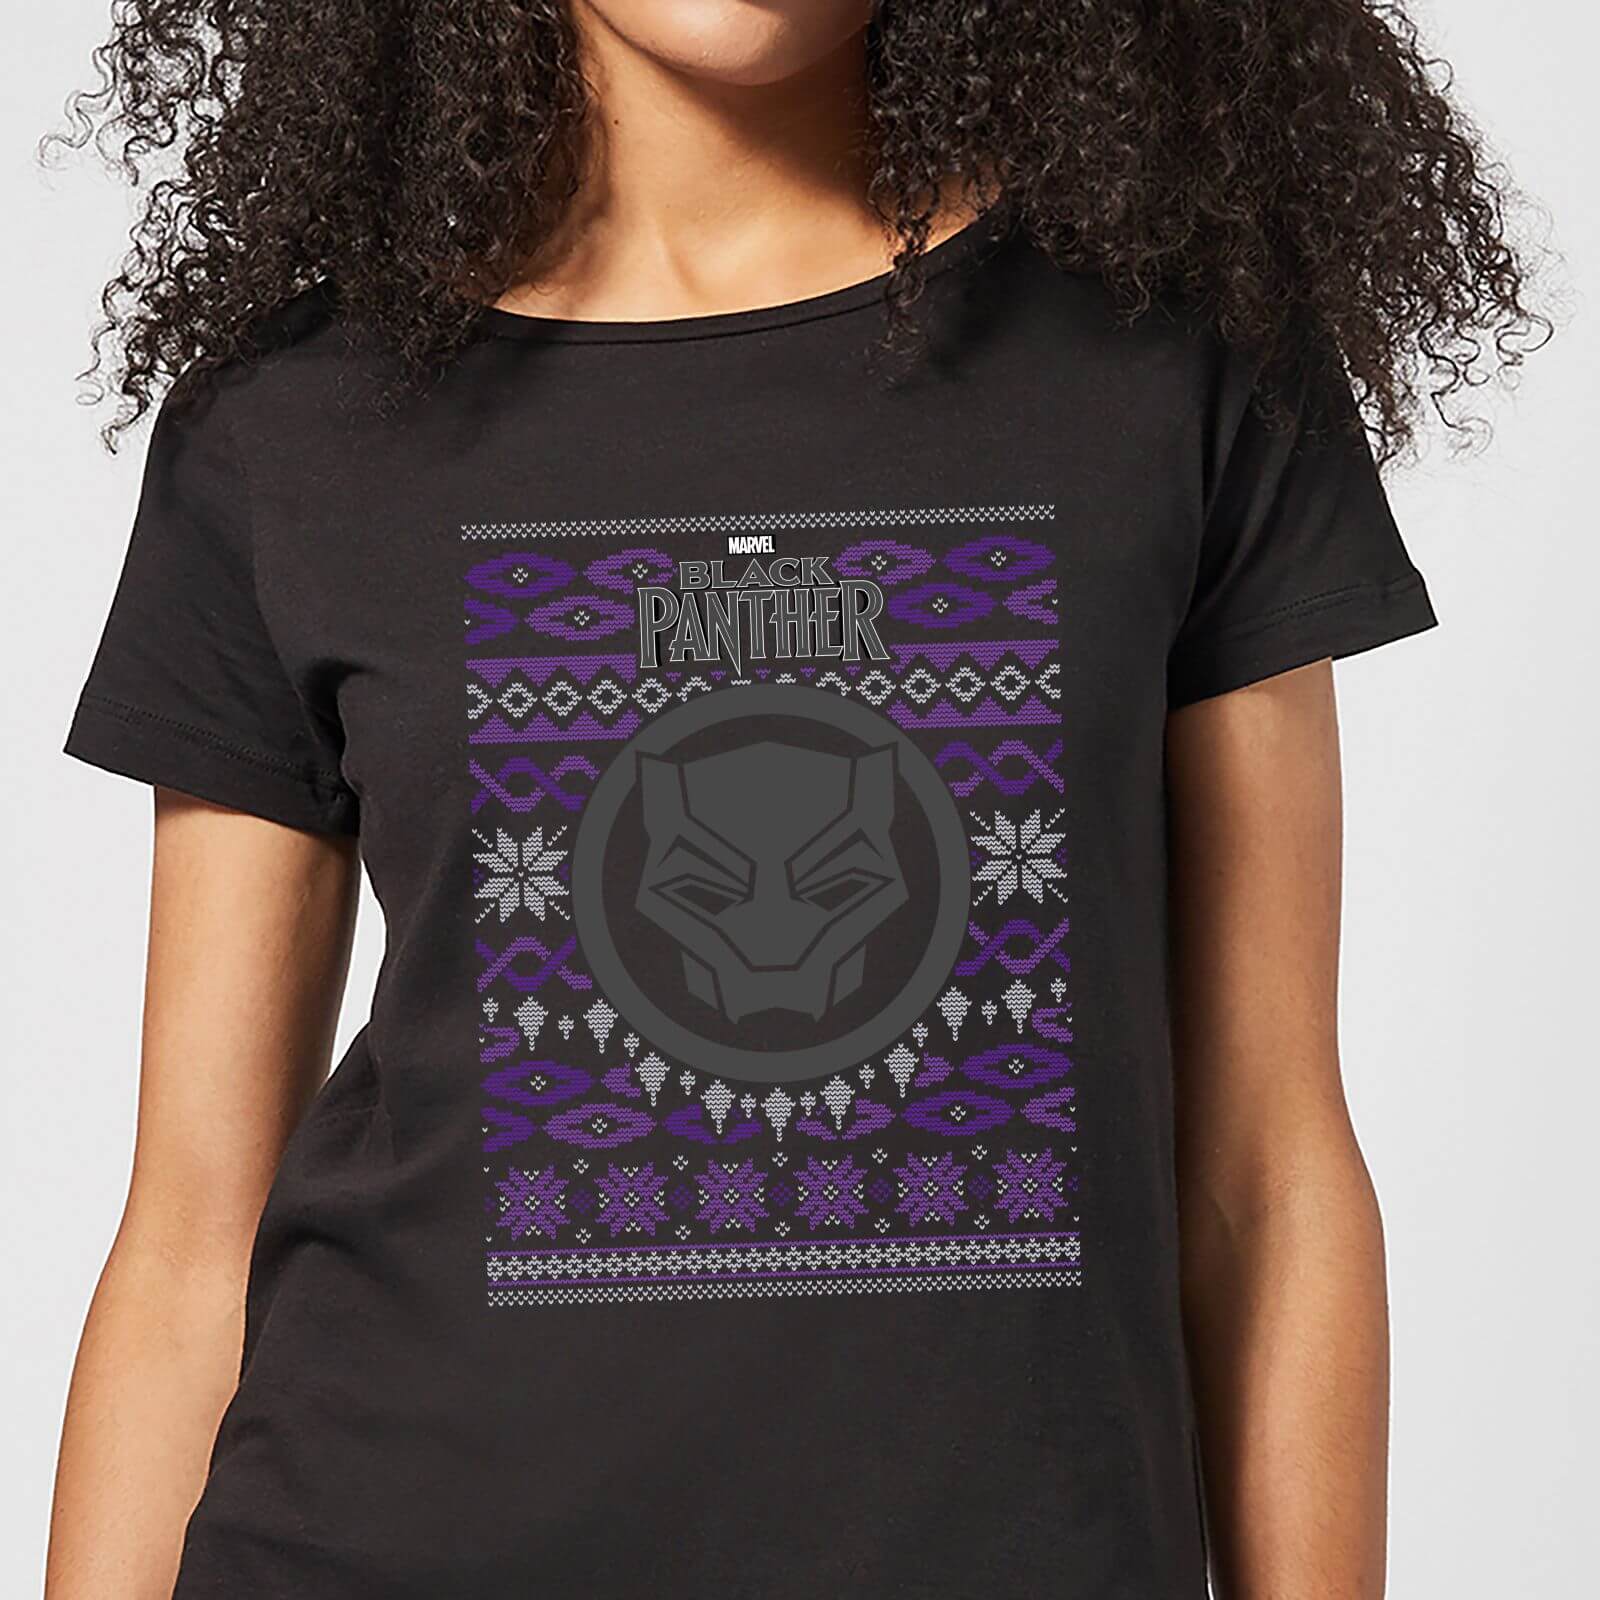 Marvel Avengers Black Panther Women's Christmas T-Shirt - Black - 4XL